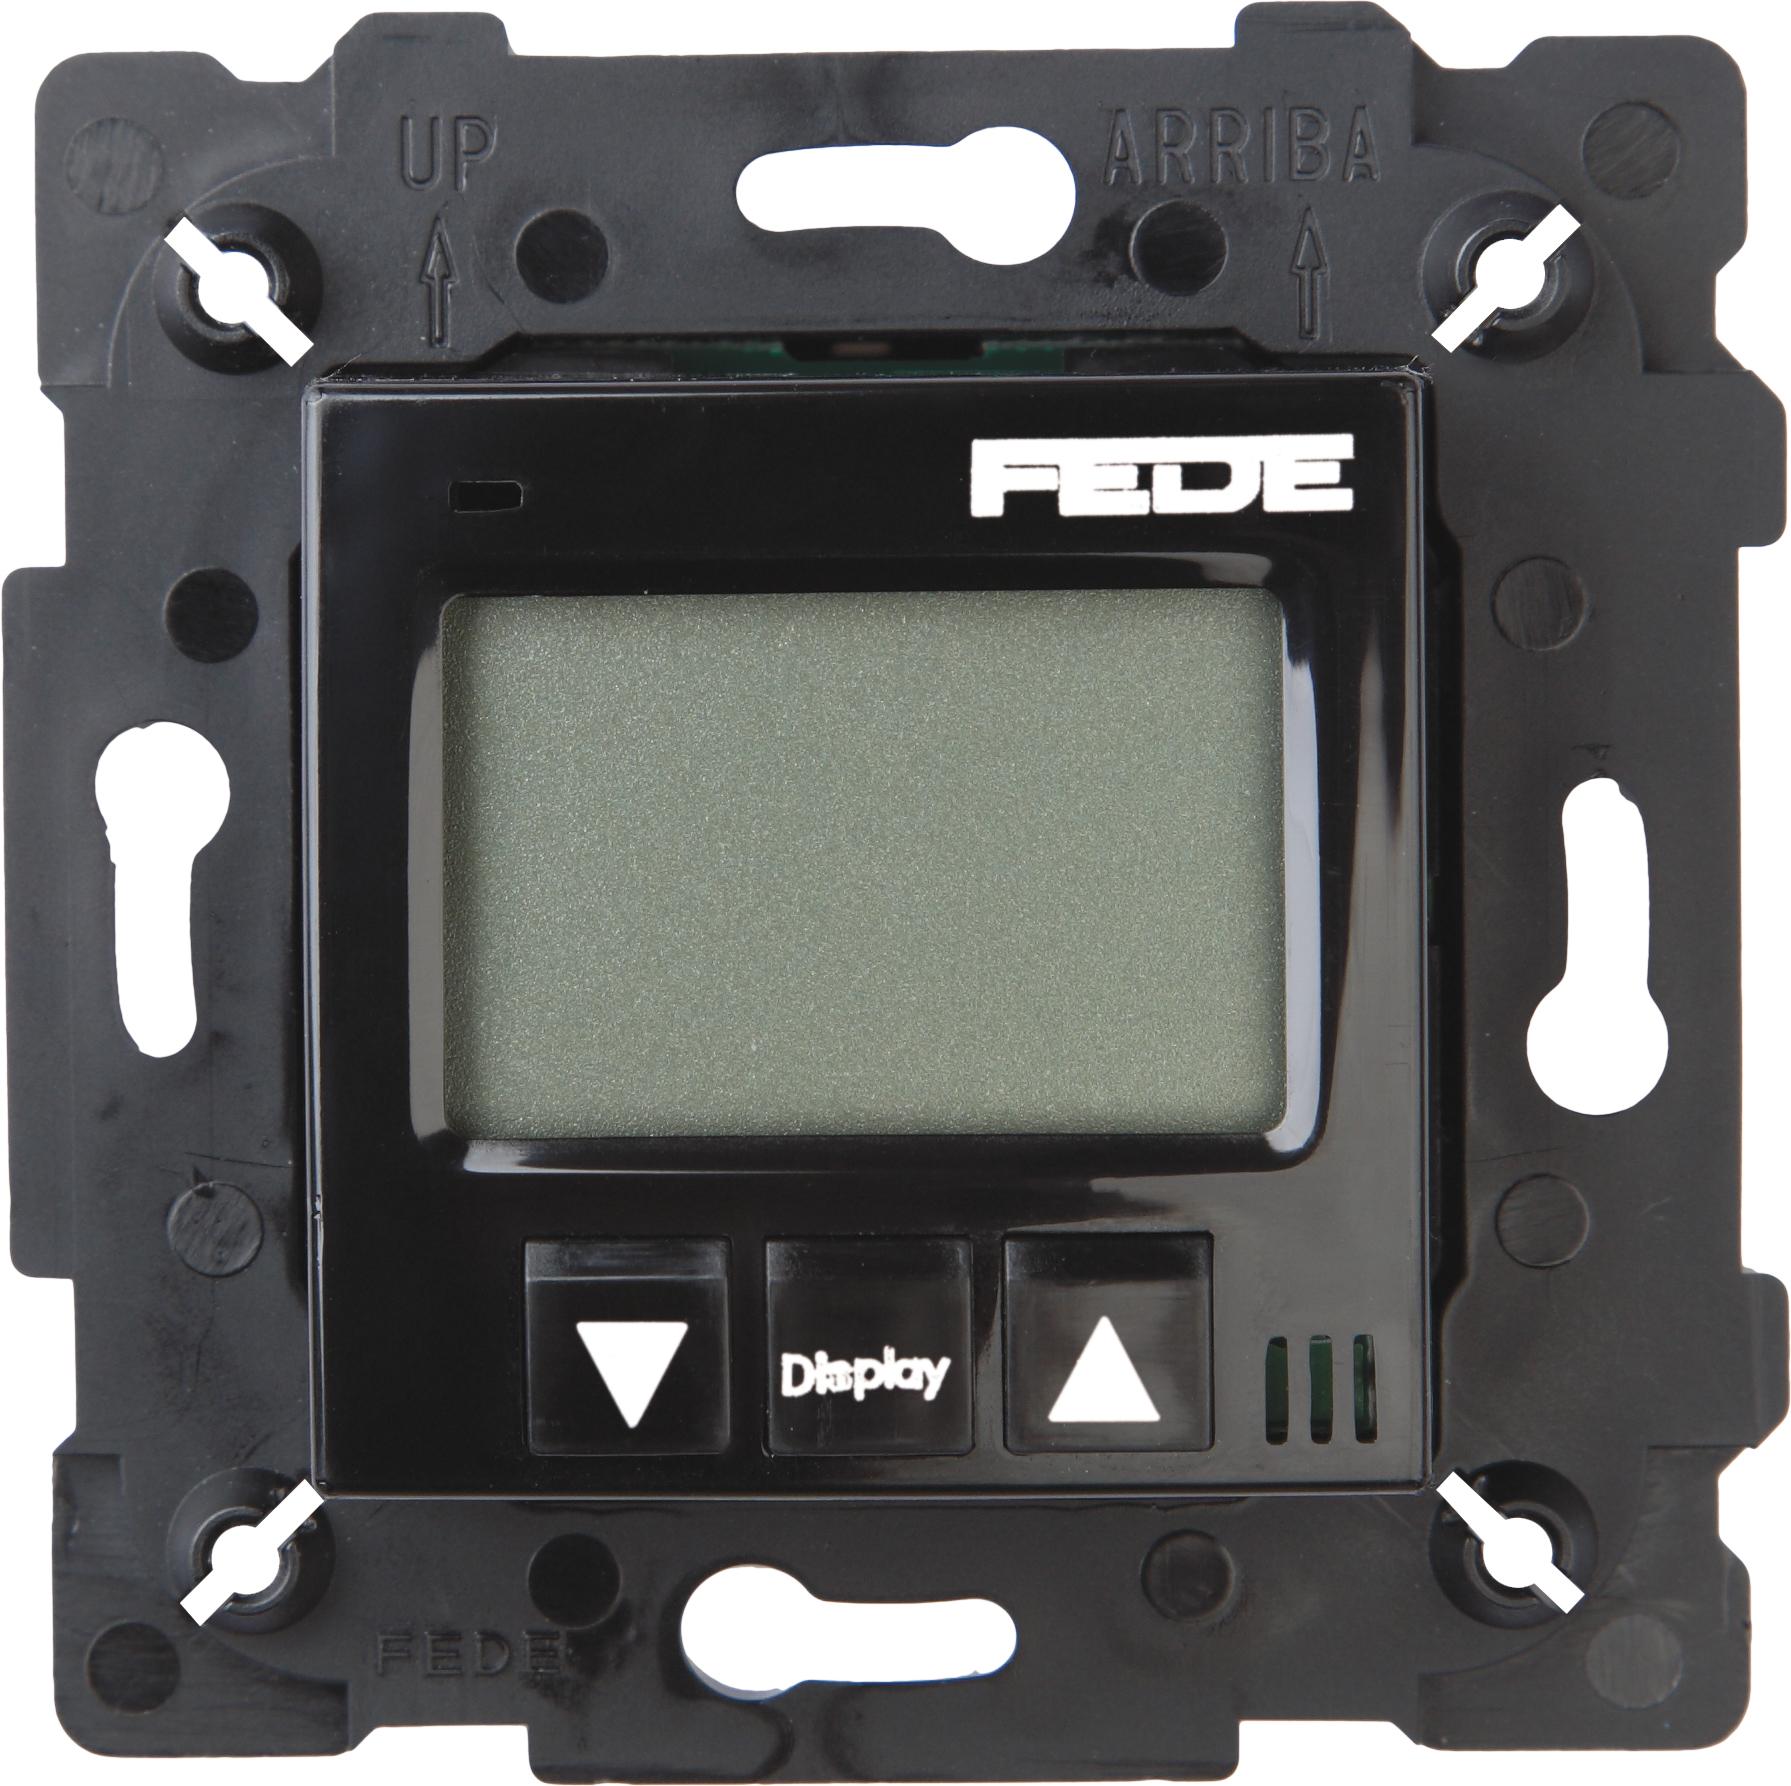  артикул FD18001-M название FEDE Черный Терморегулятор Цифровой. 16A, с LCD монитором Black (Negro)